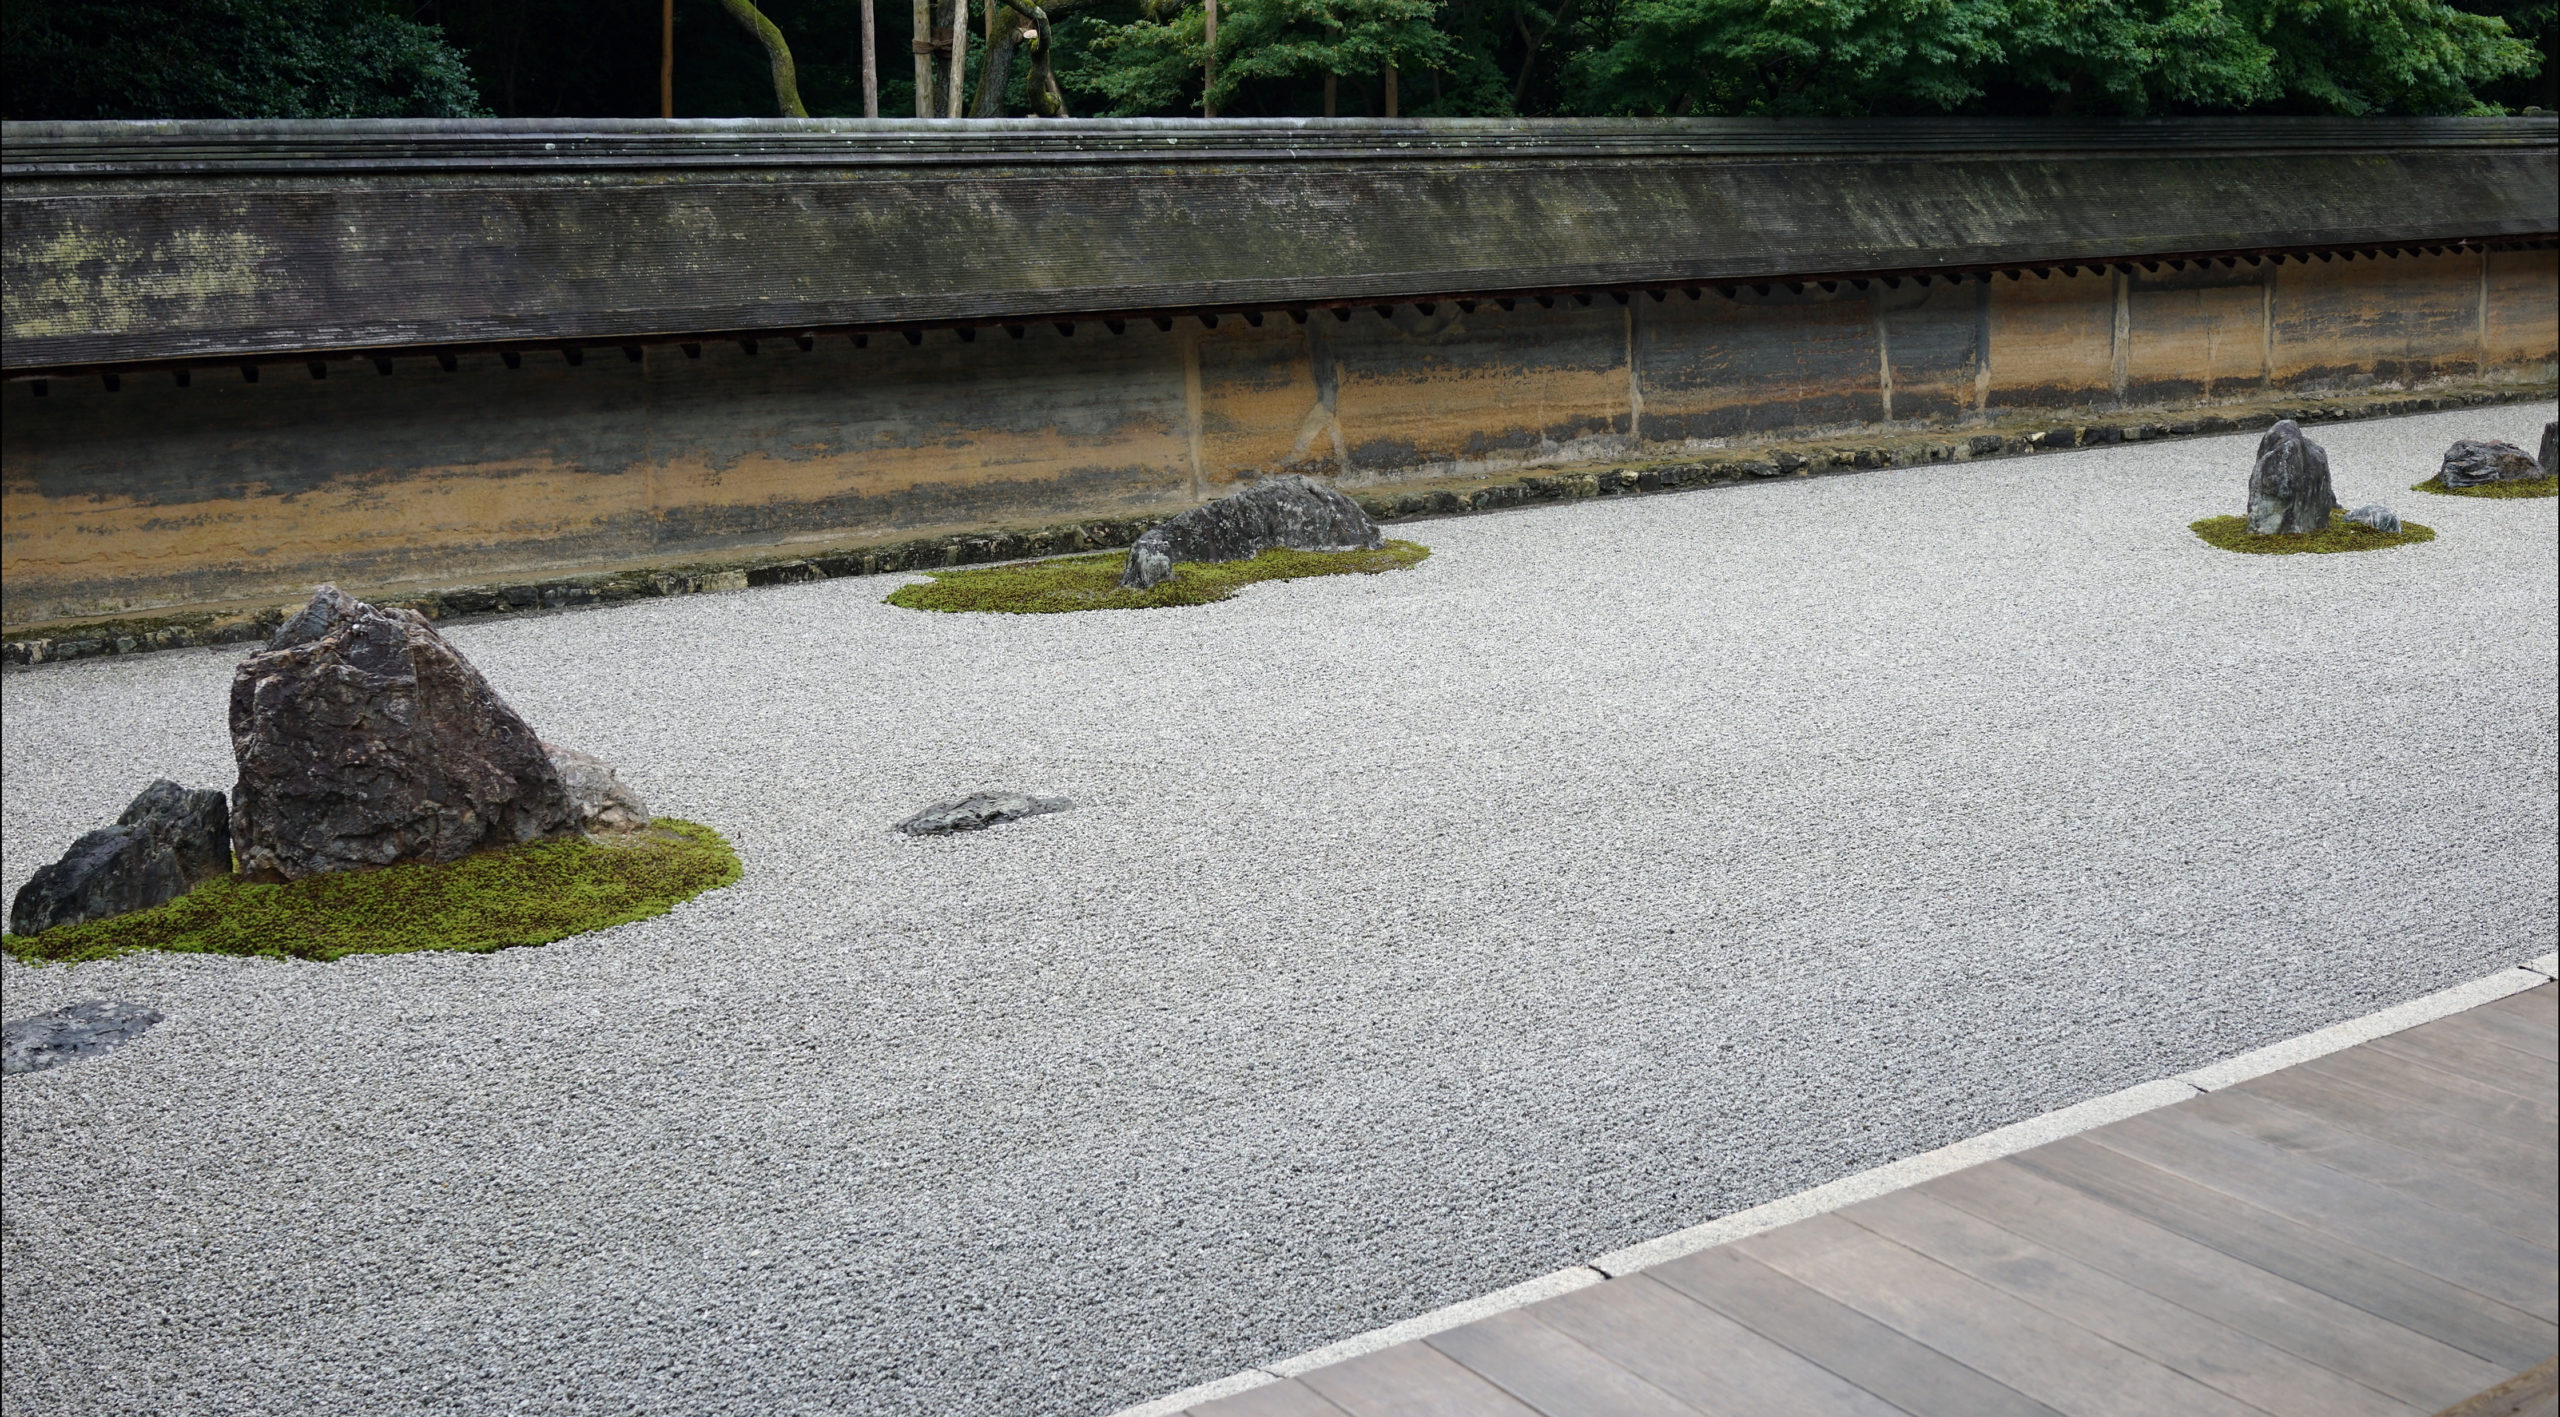 Dry rock garden, study and grounds, Ryōanji (Peaceful Dragon Temple), Kyoto, Japan (photo: Steven Zucker, CC BY-NC-SA 2.0)